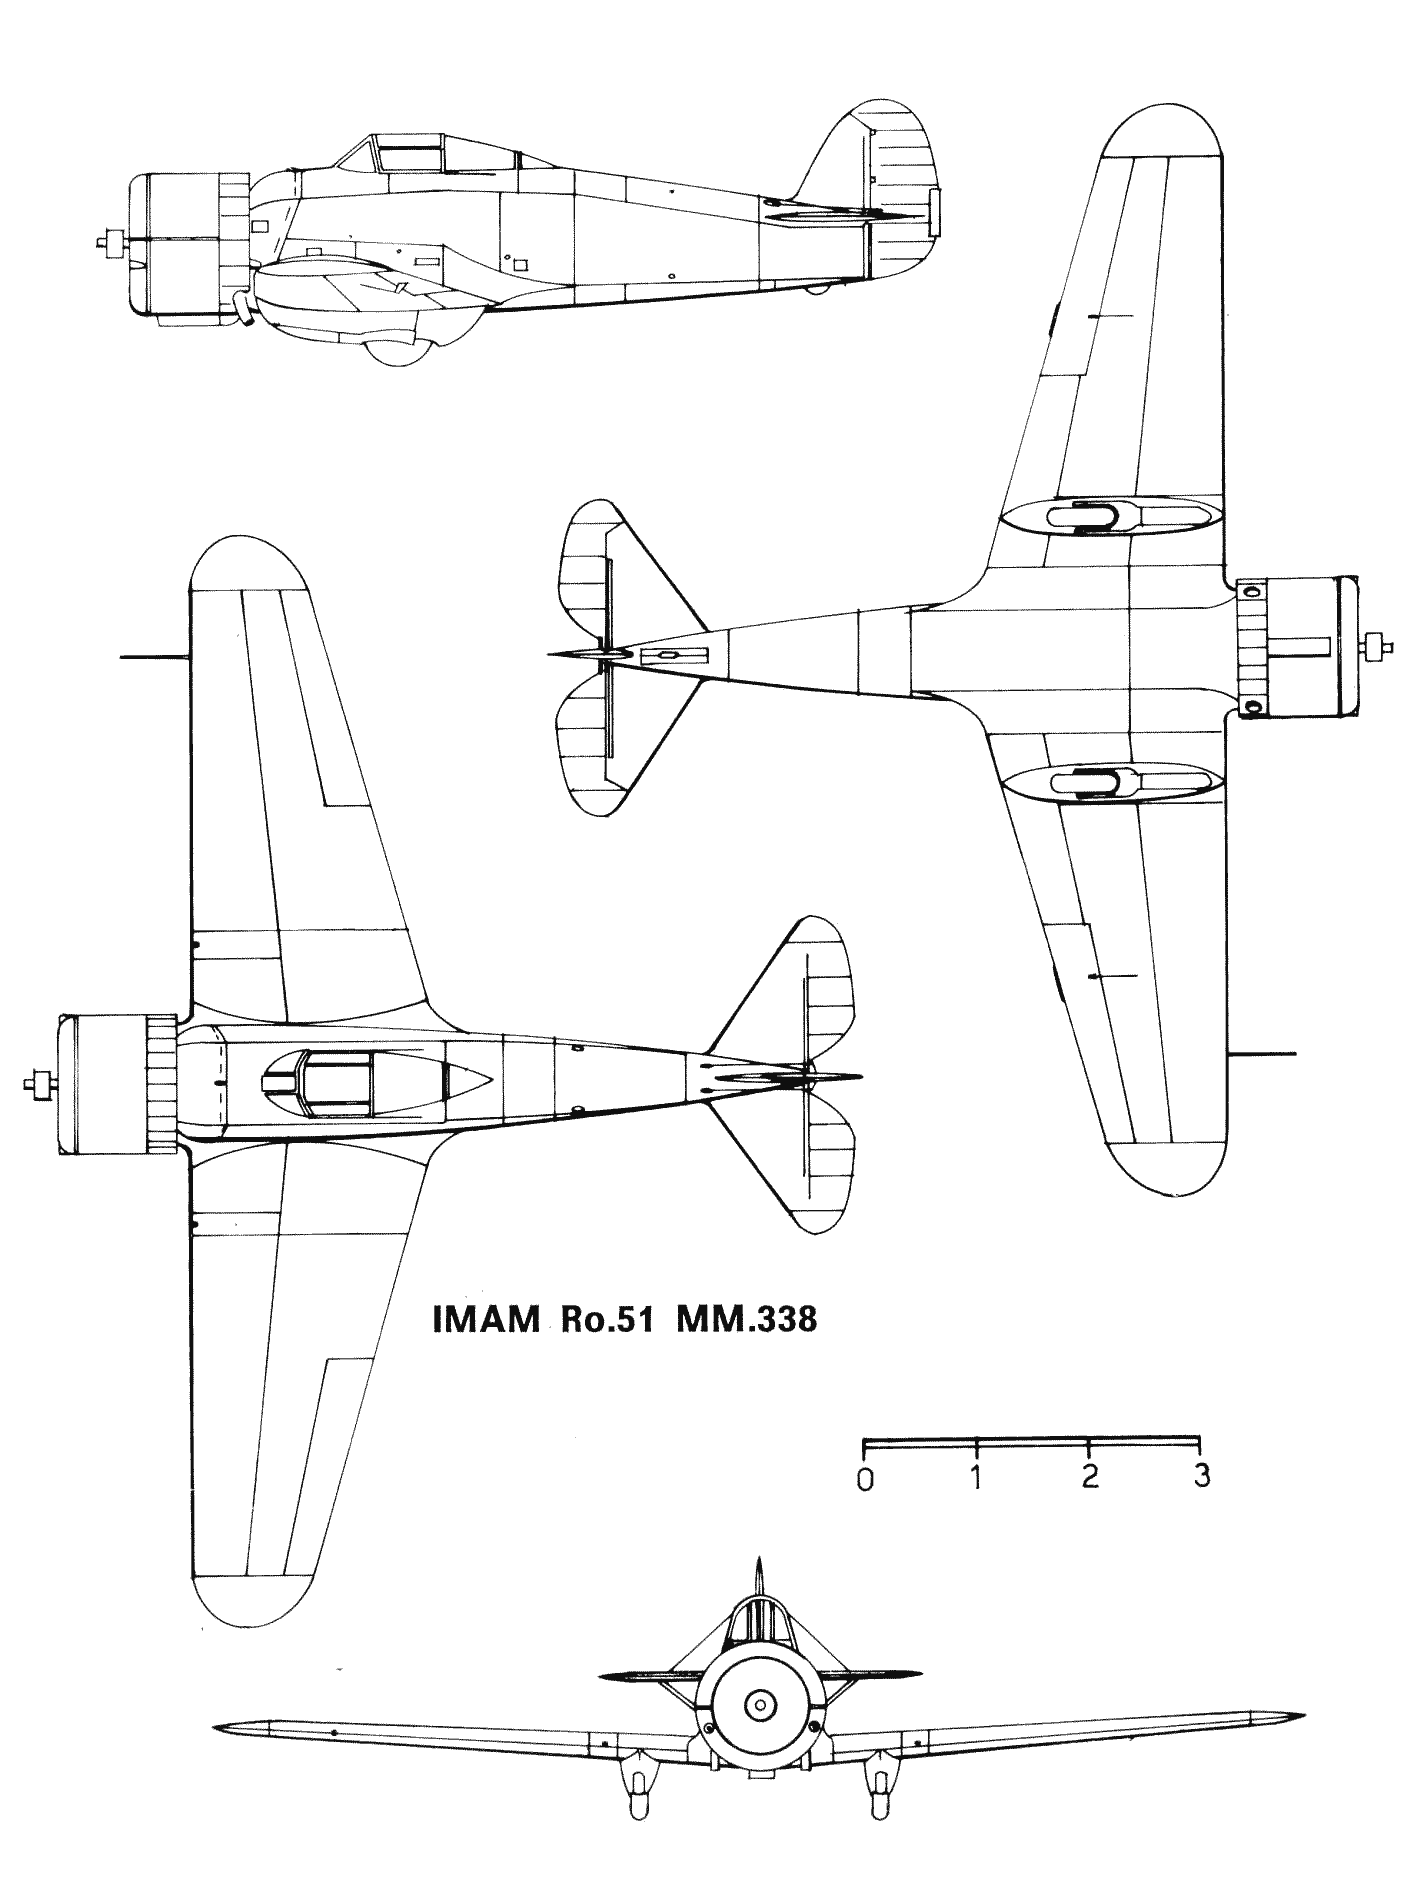 IMAM Ro.51 blueprint